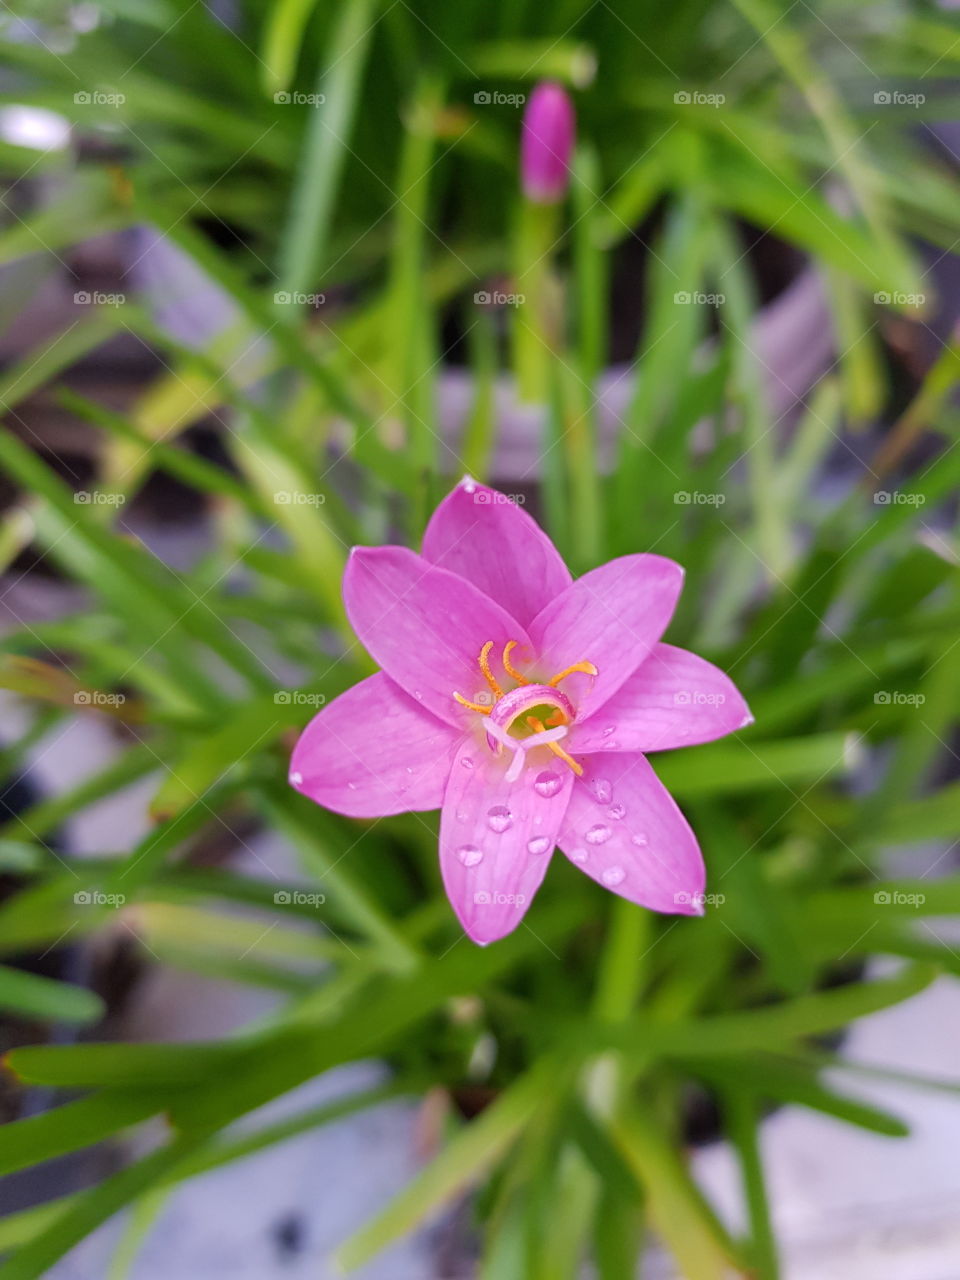 Pink Flower in Bloom
Different depth but same focused
(no filter)
auto focused

📸: tinkerjov
📱: samsung s8 plus